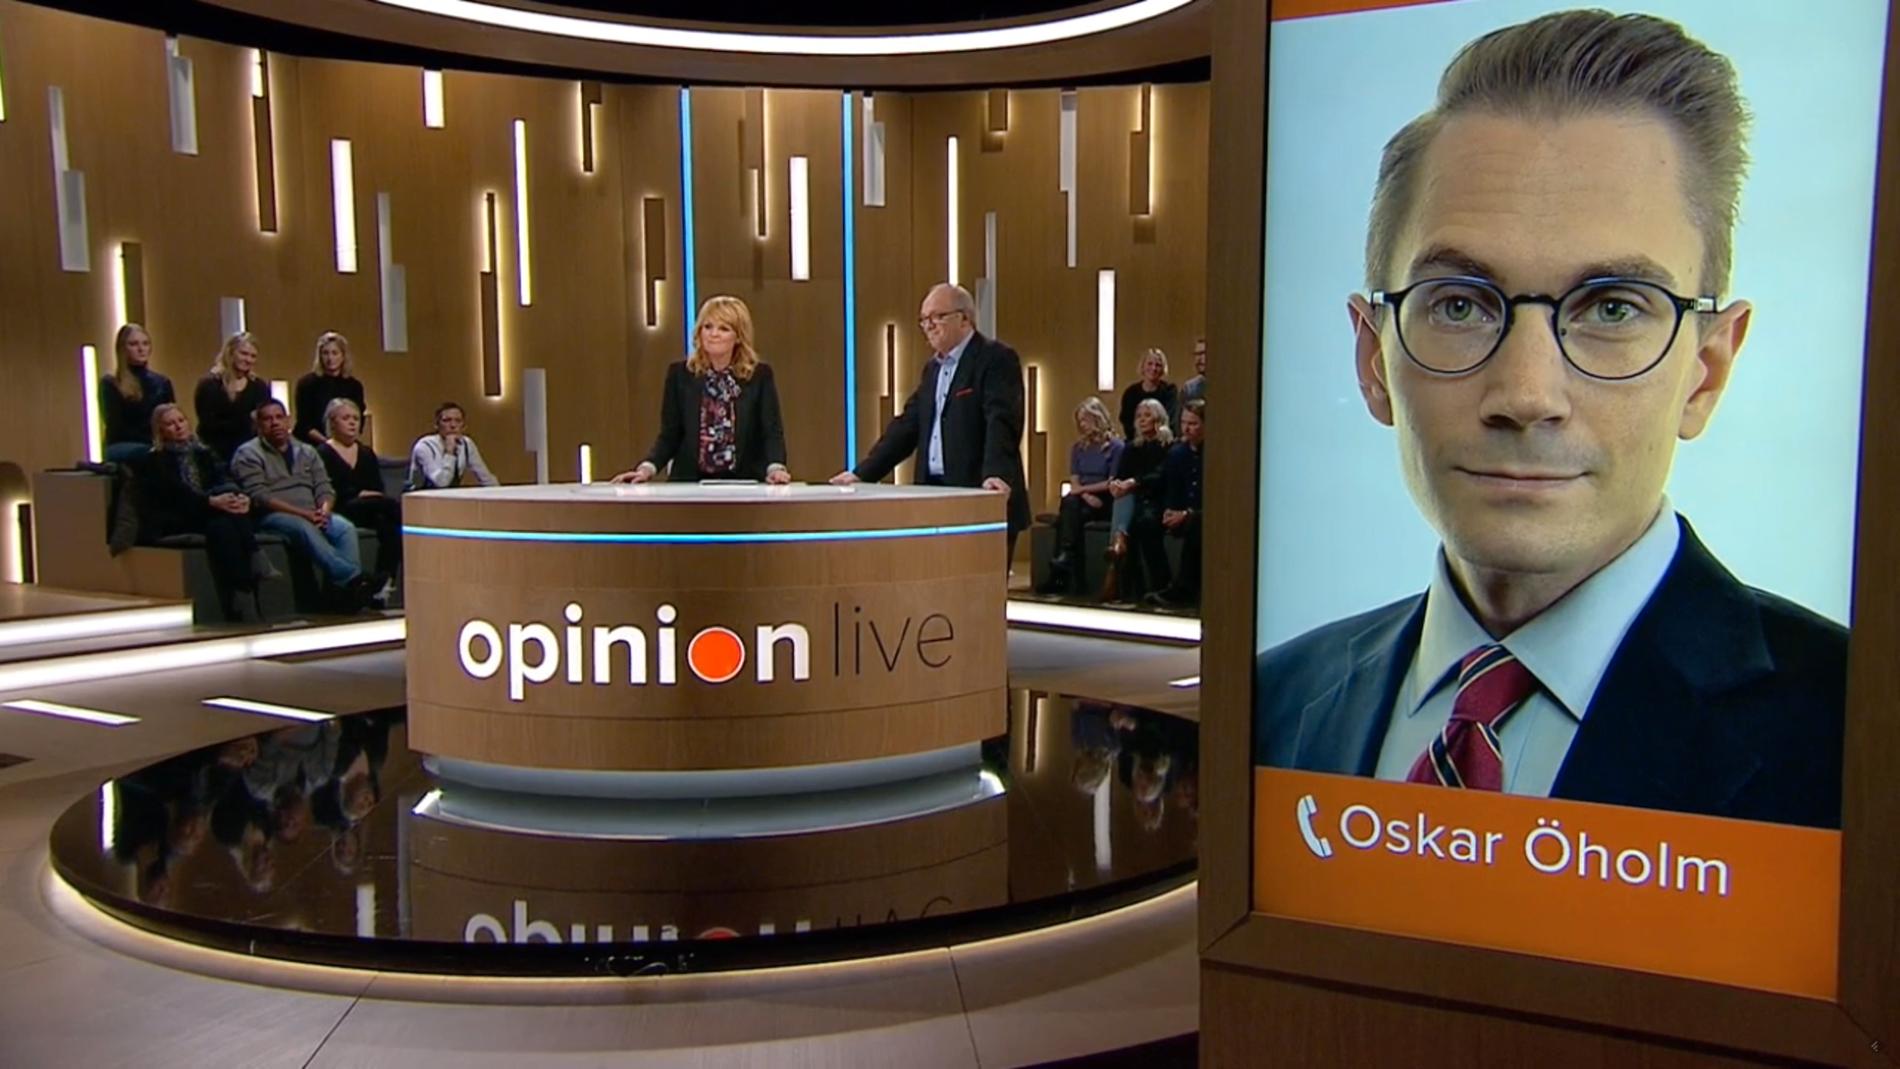 Oskar Öholm via telefon i ”Opinion live”